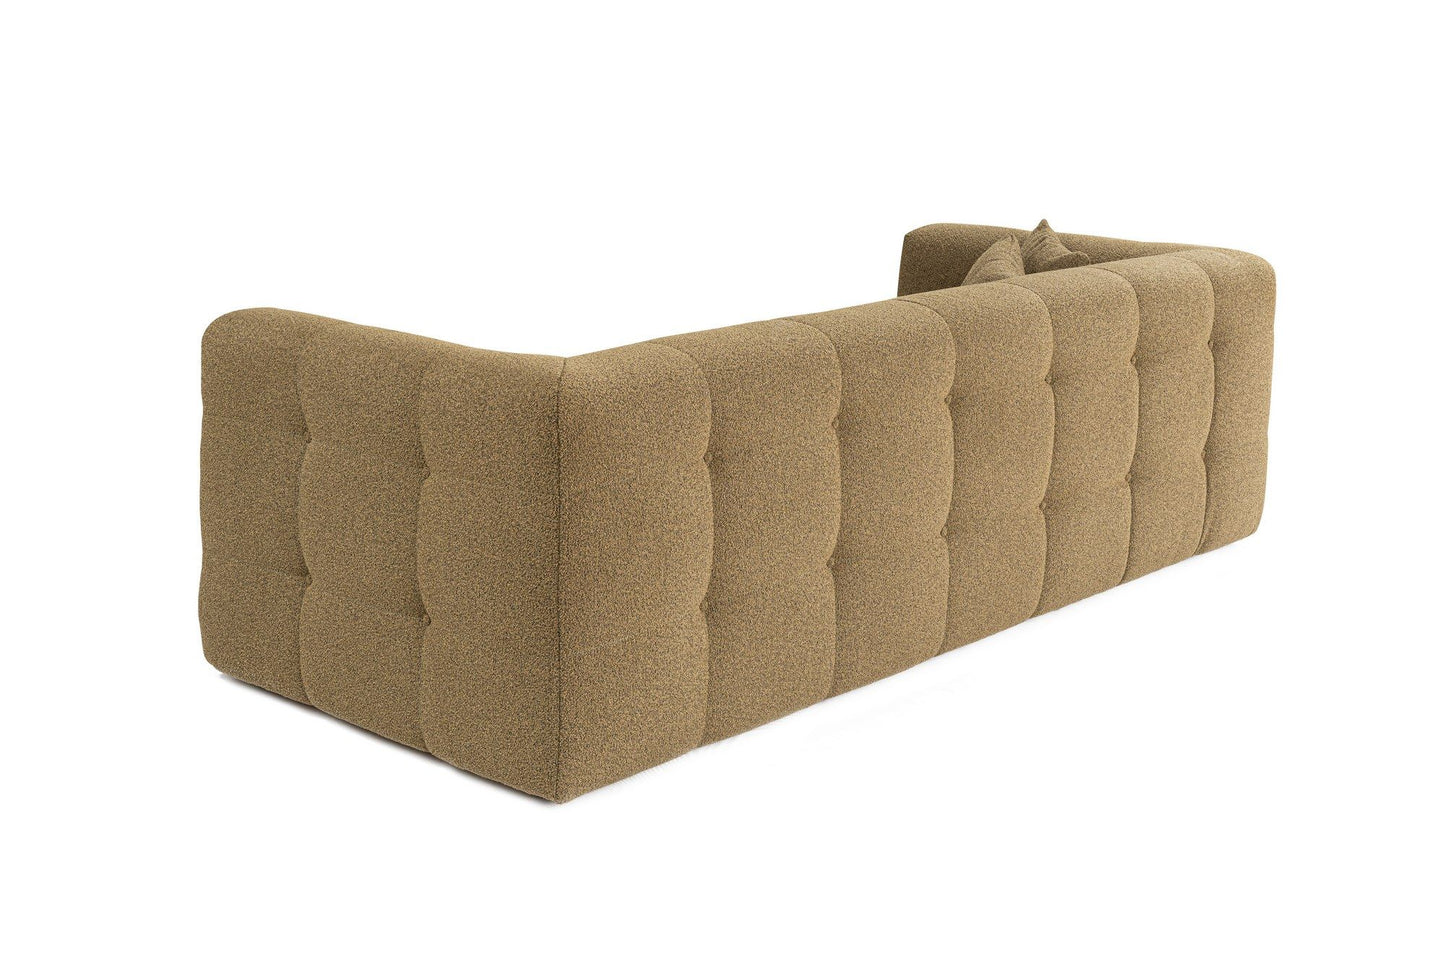 Cady - Khaki - 3-Seat Sofa